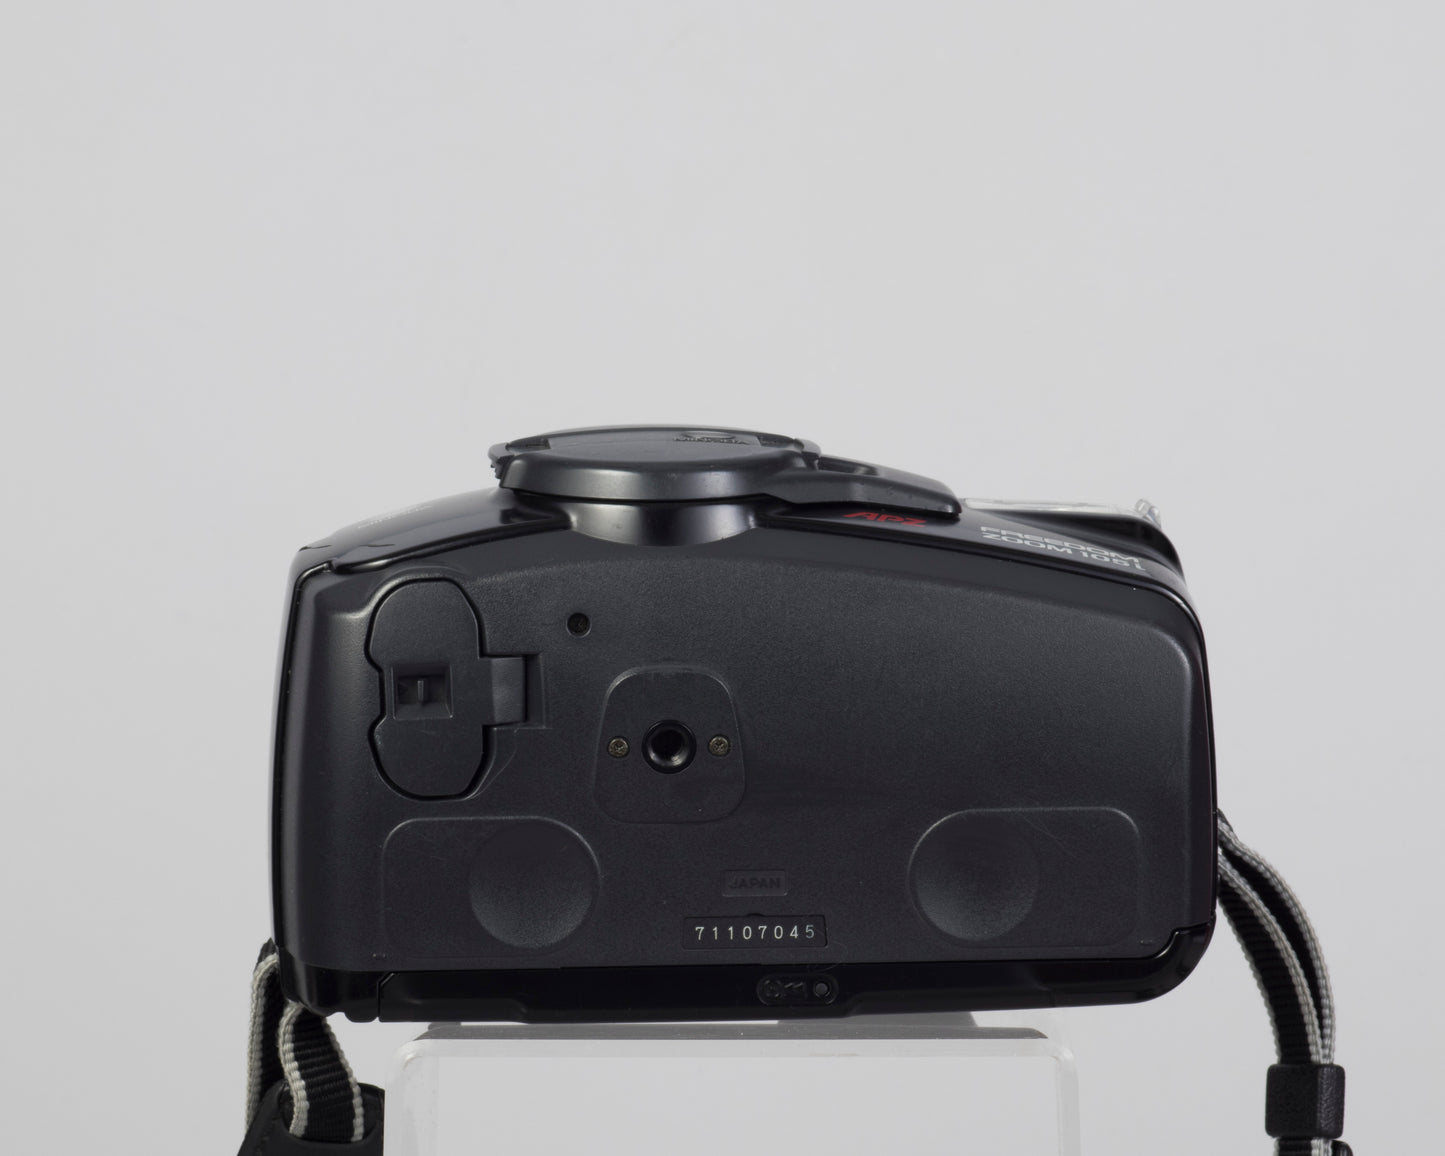 Minolta Freedom Zoom 105i 35mm film camera (mode display not working)